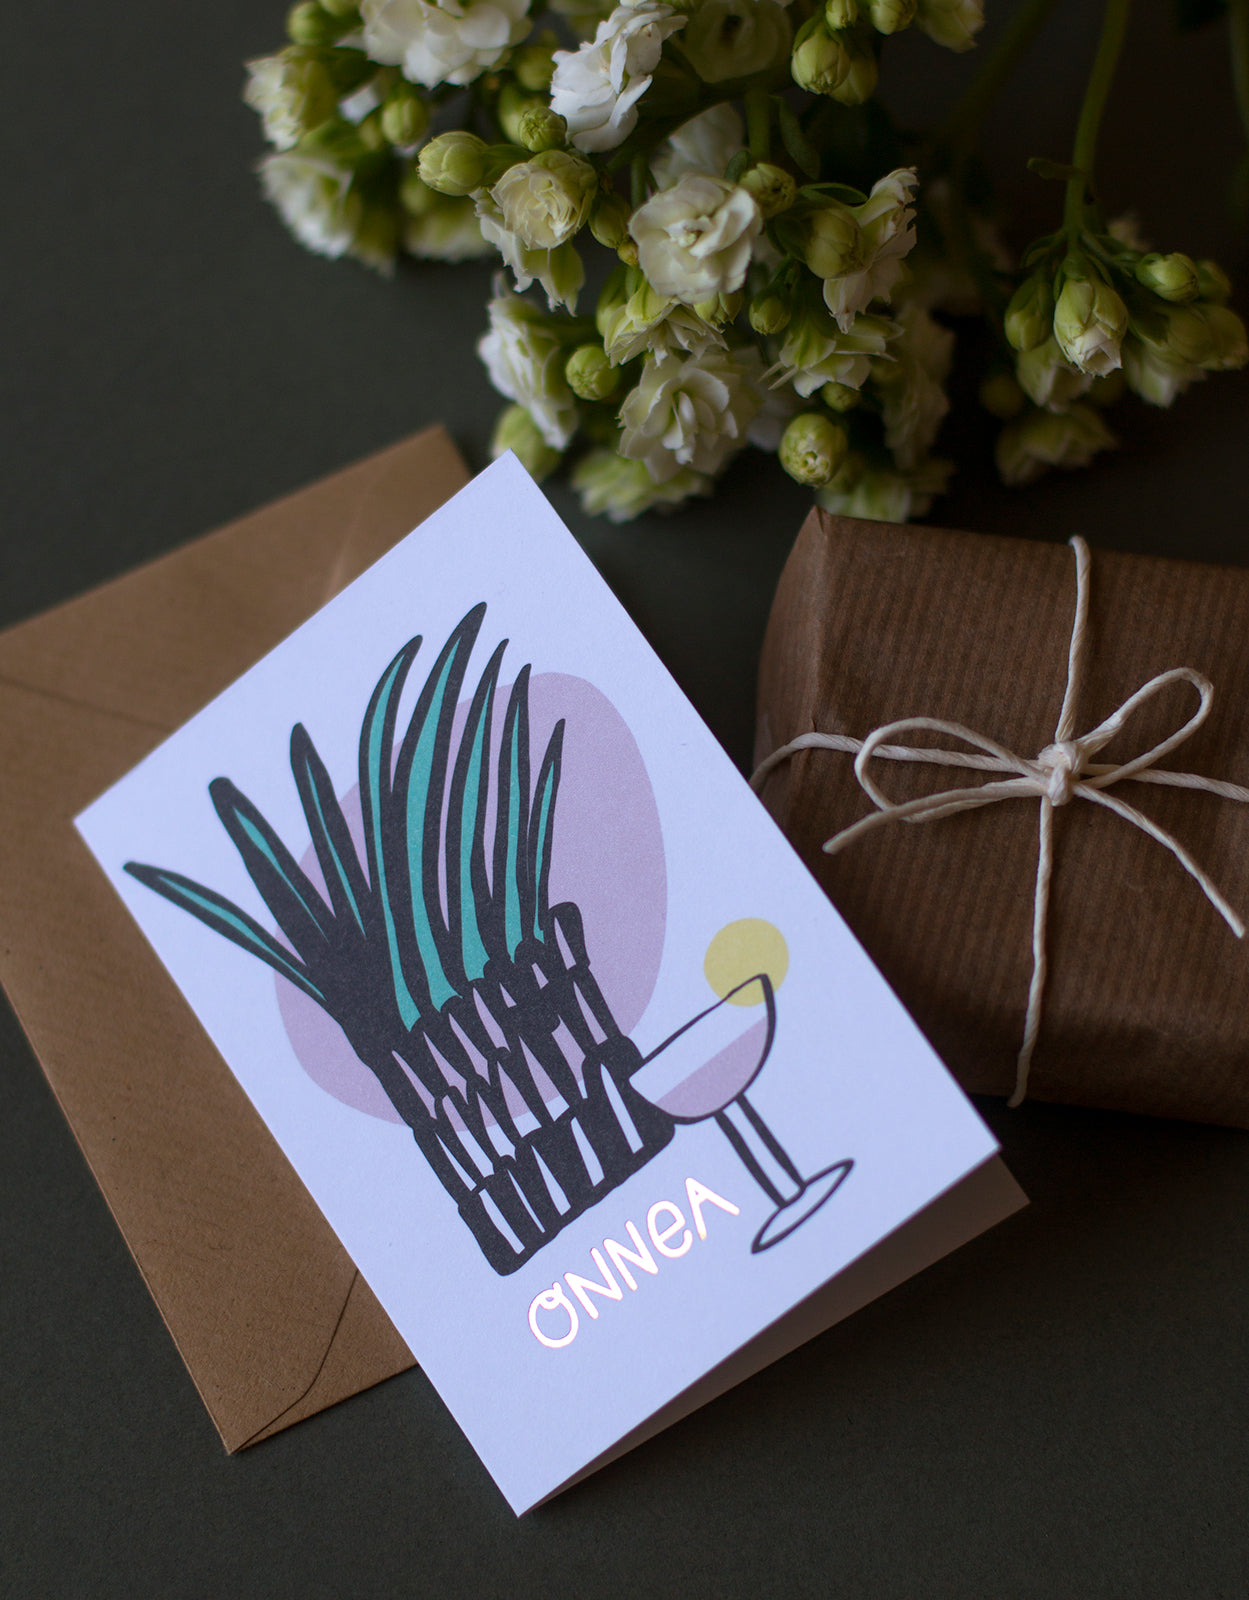 Drinkki mini greeting card and flowers